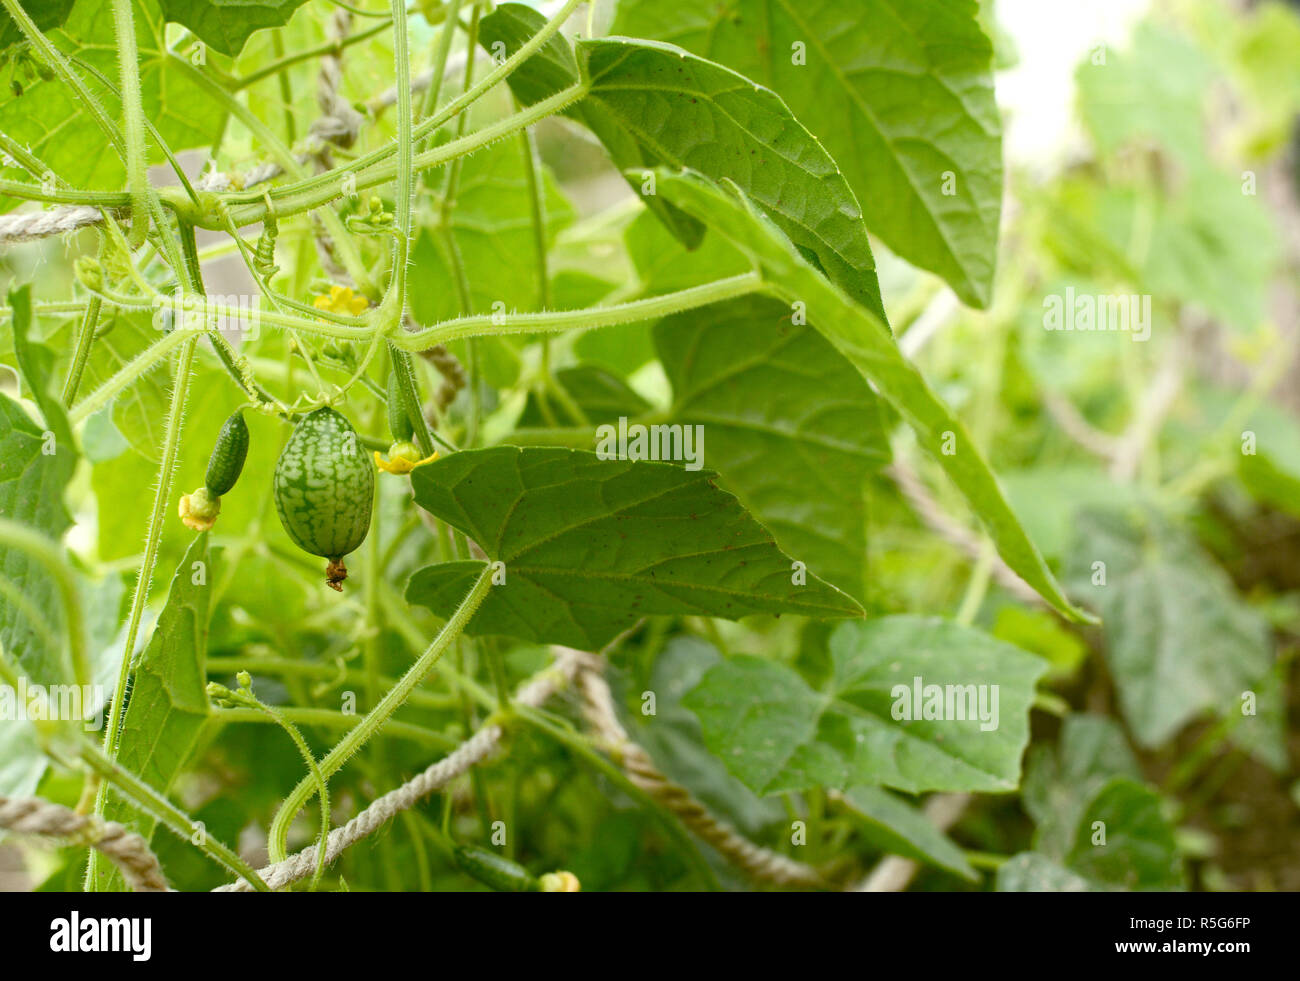 Growing cucamelon fruits hidden among lush foliage Stock Photo